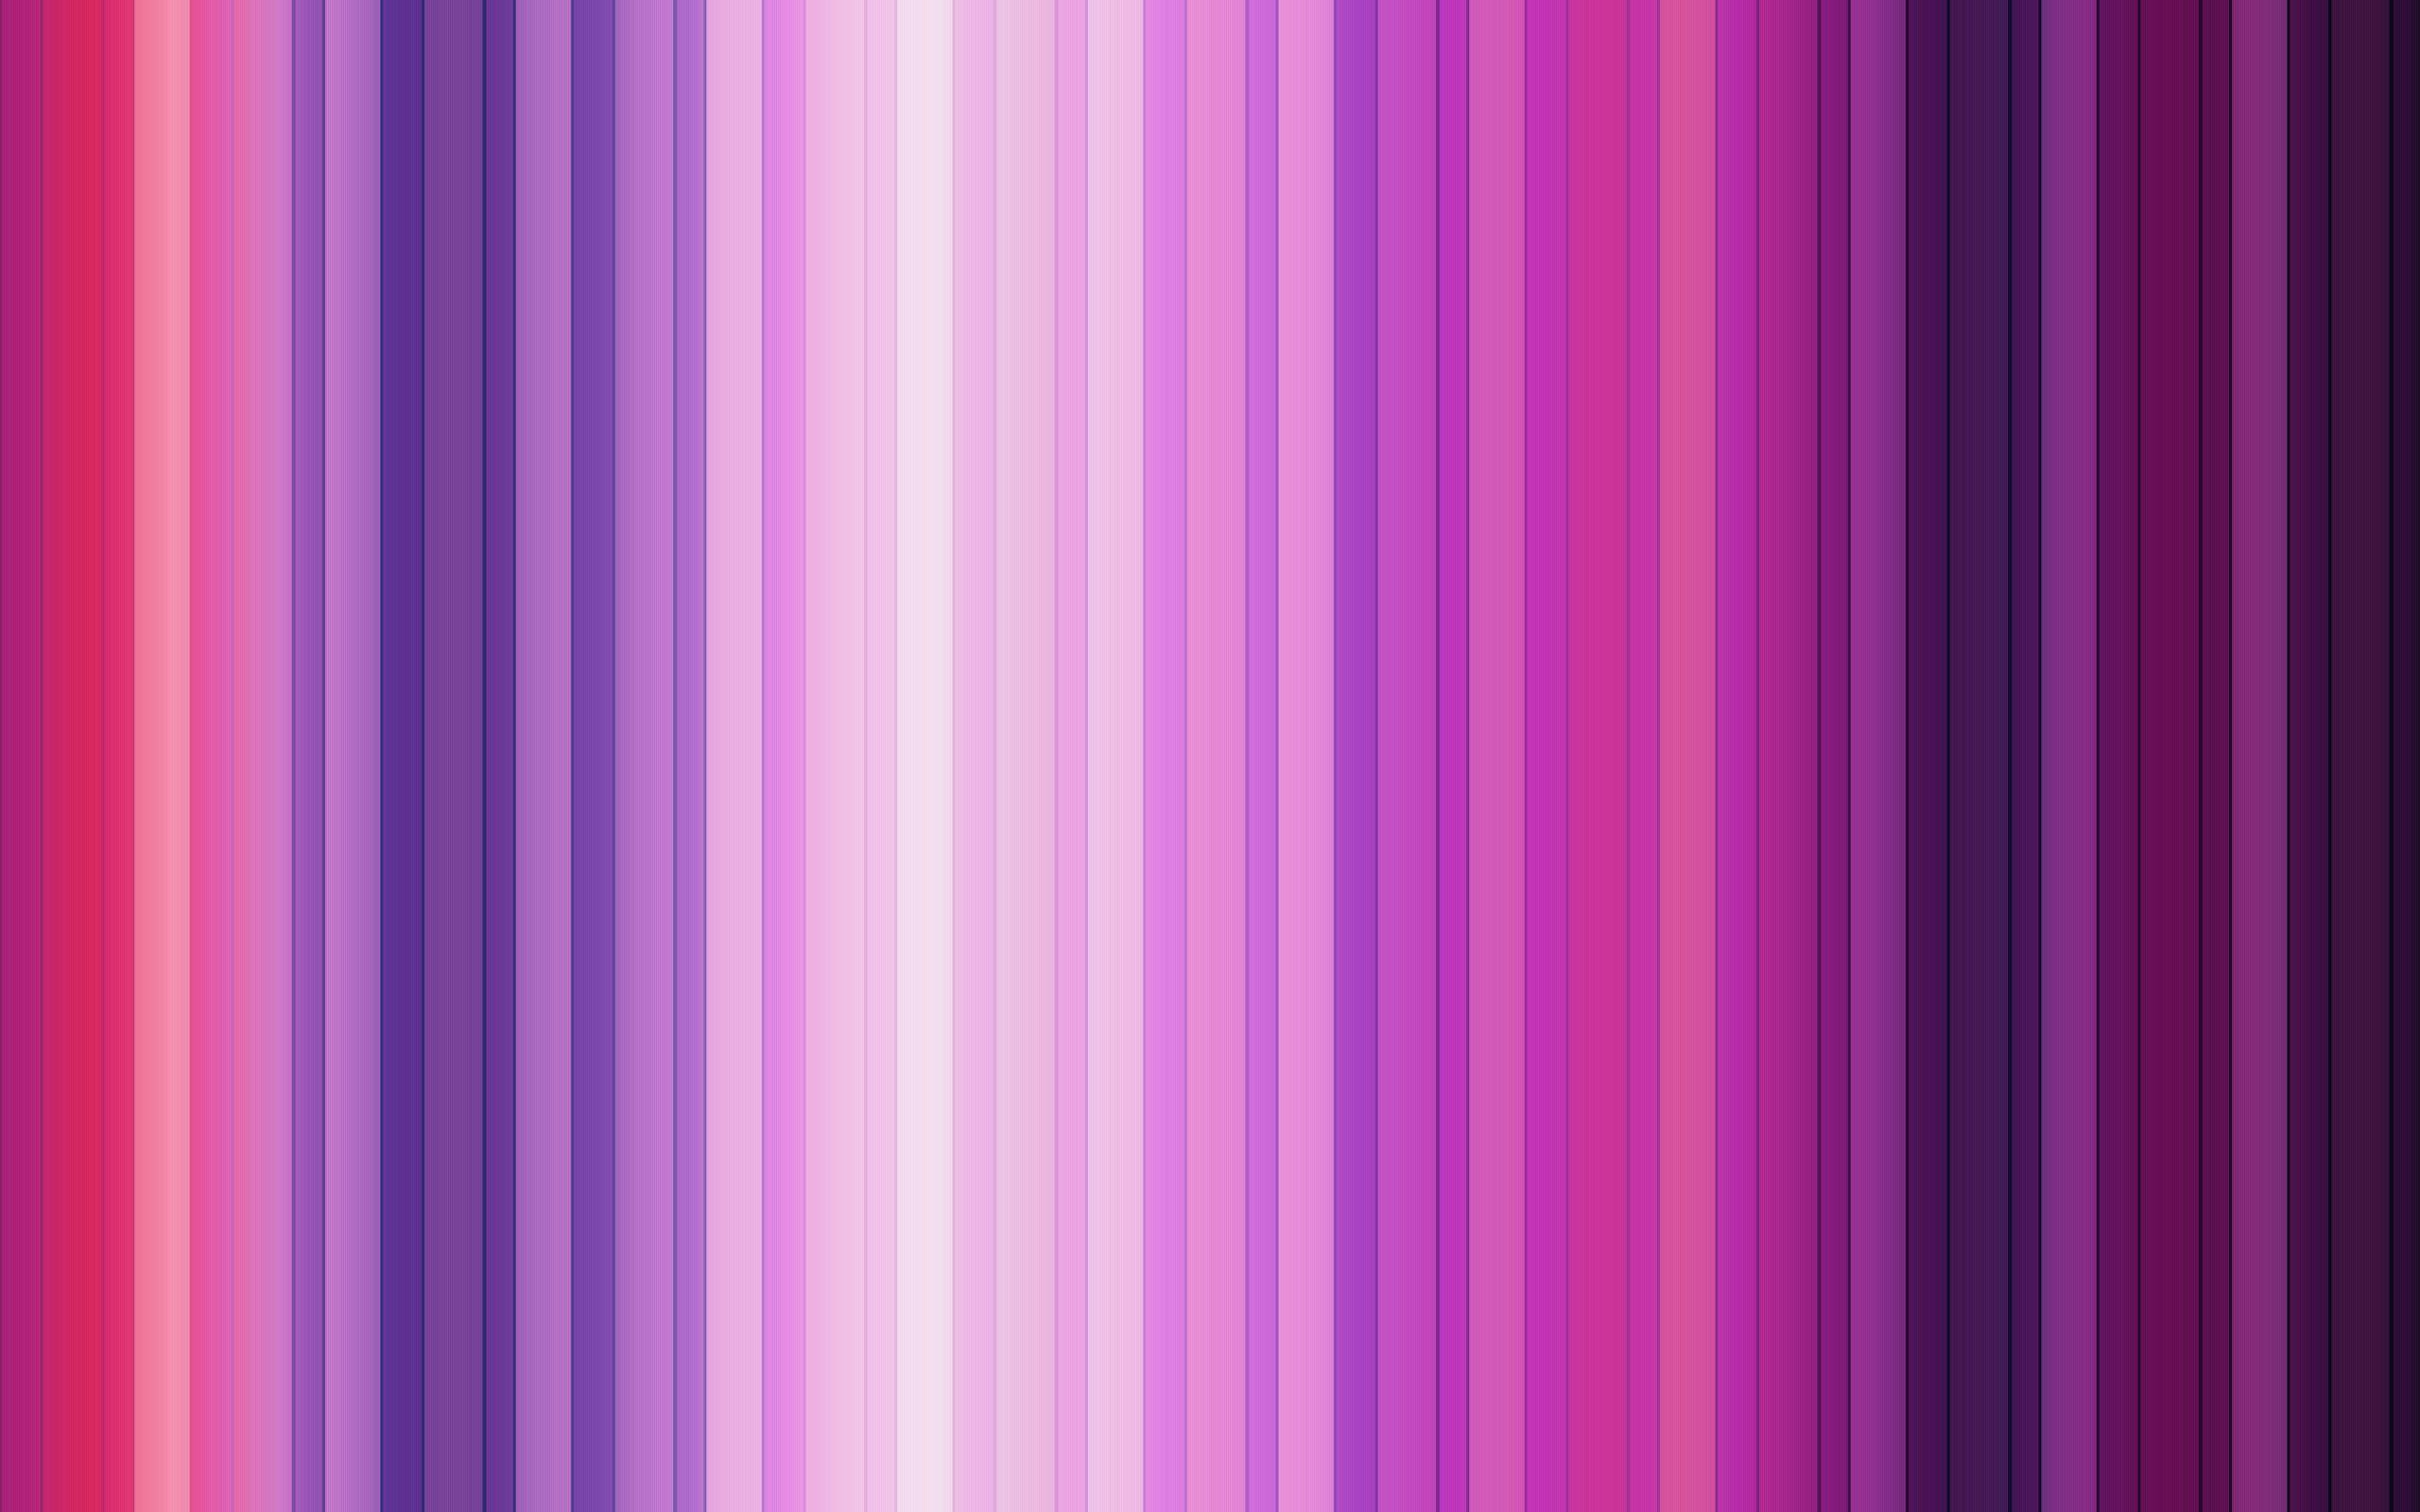 Cool Pink Wallpaper 45116 2560x1600 px